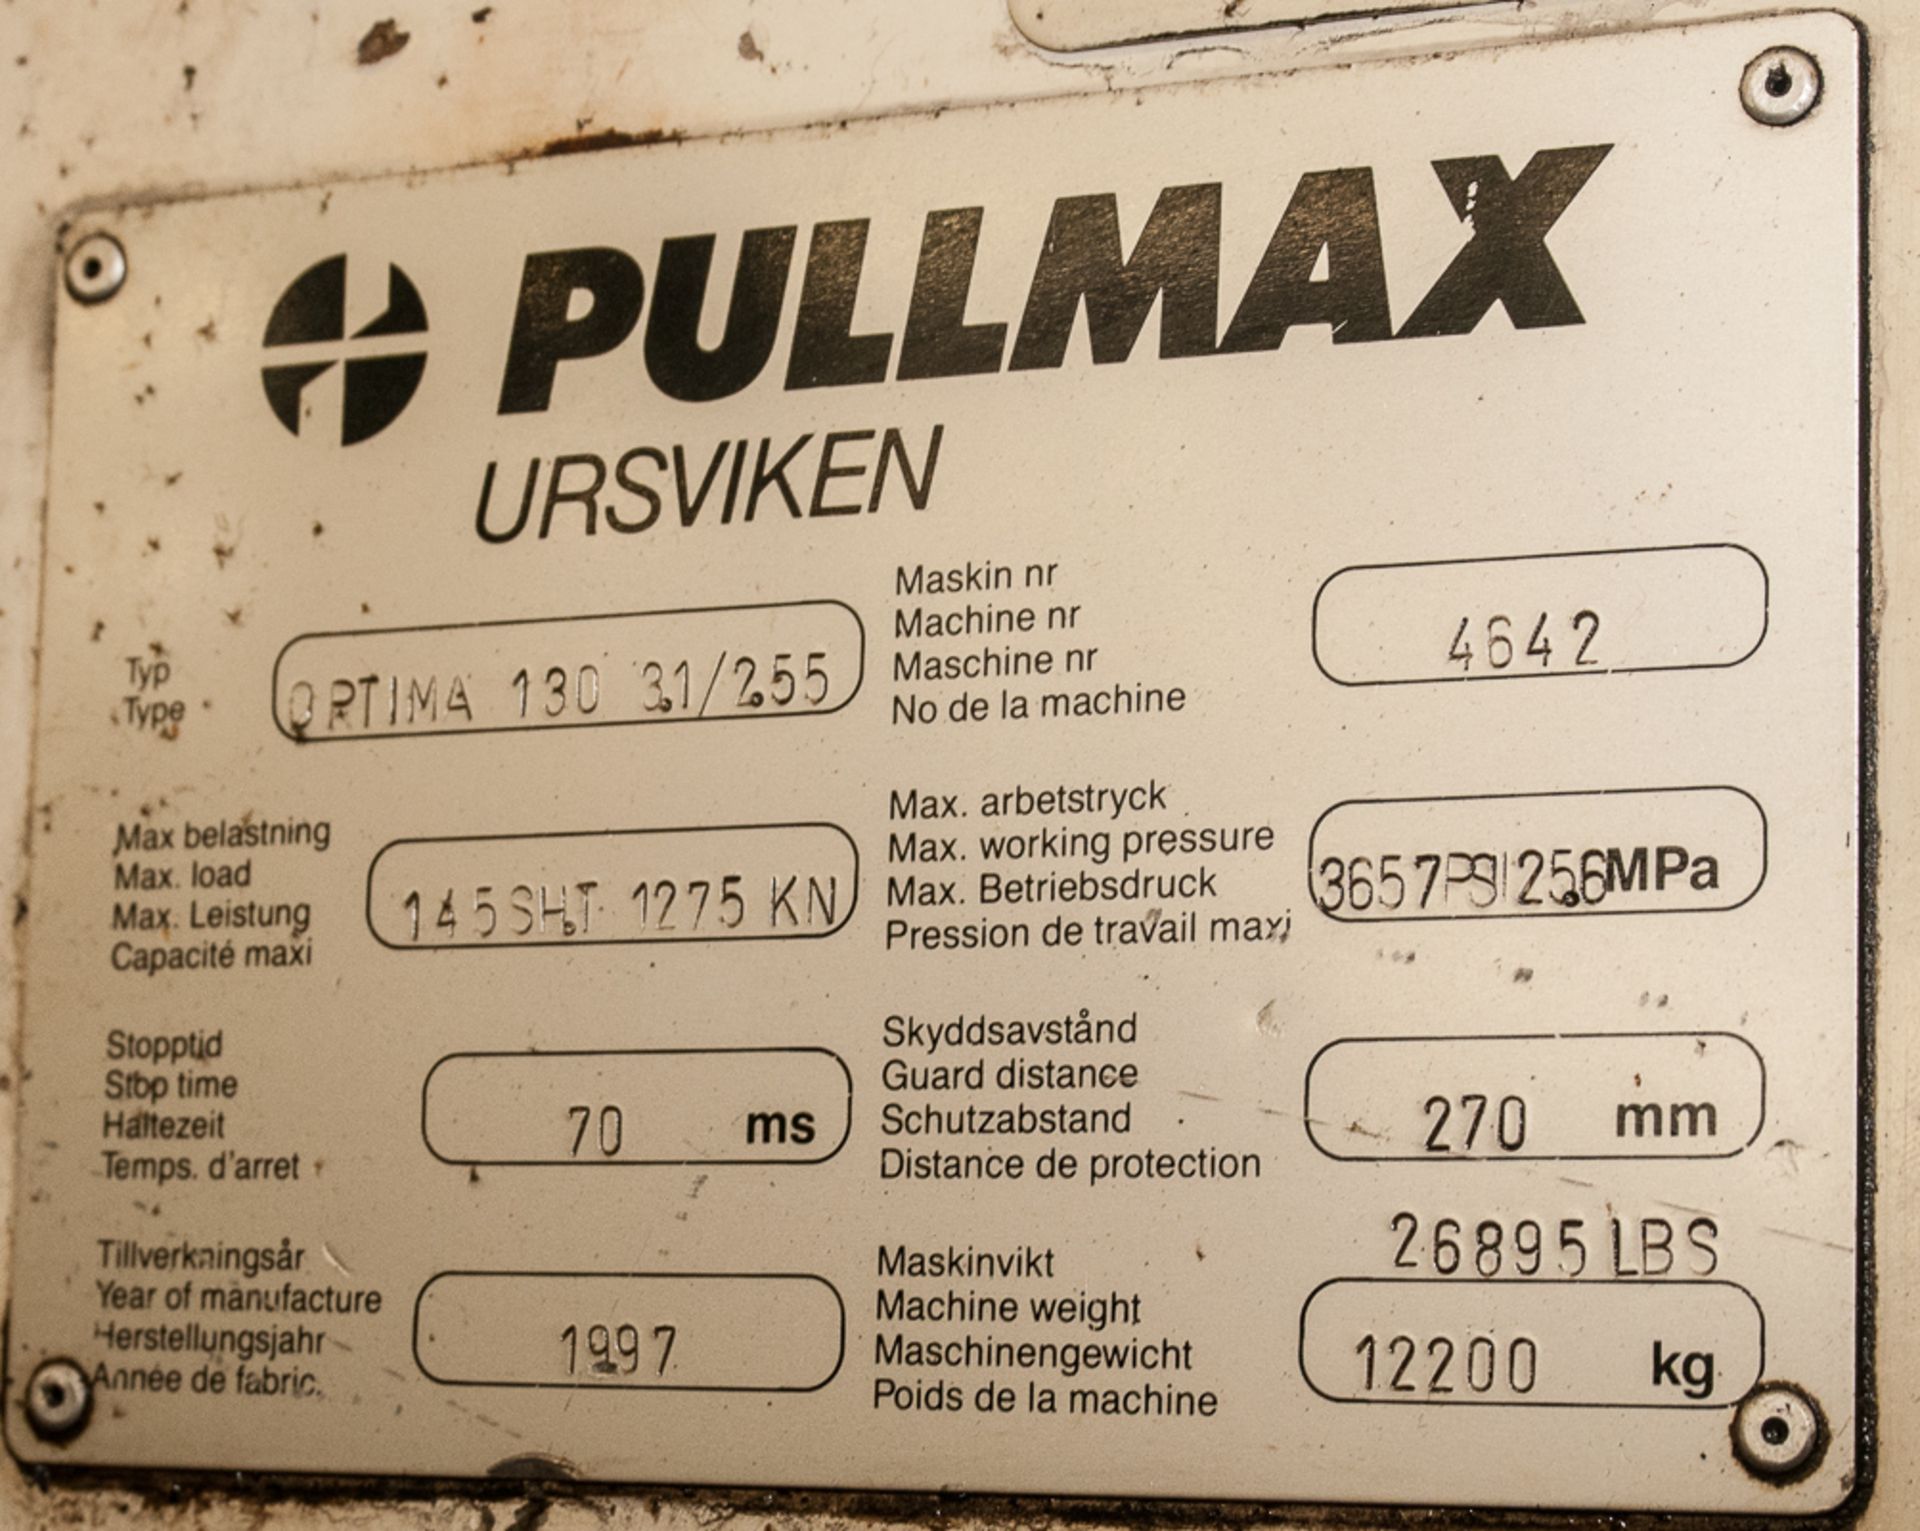 Pullmax 7 axis CNC Optima 130 Press Brake  145 ton, 12 Ft bed - Image 3 of 3